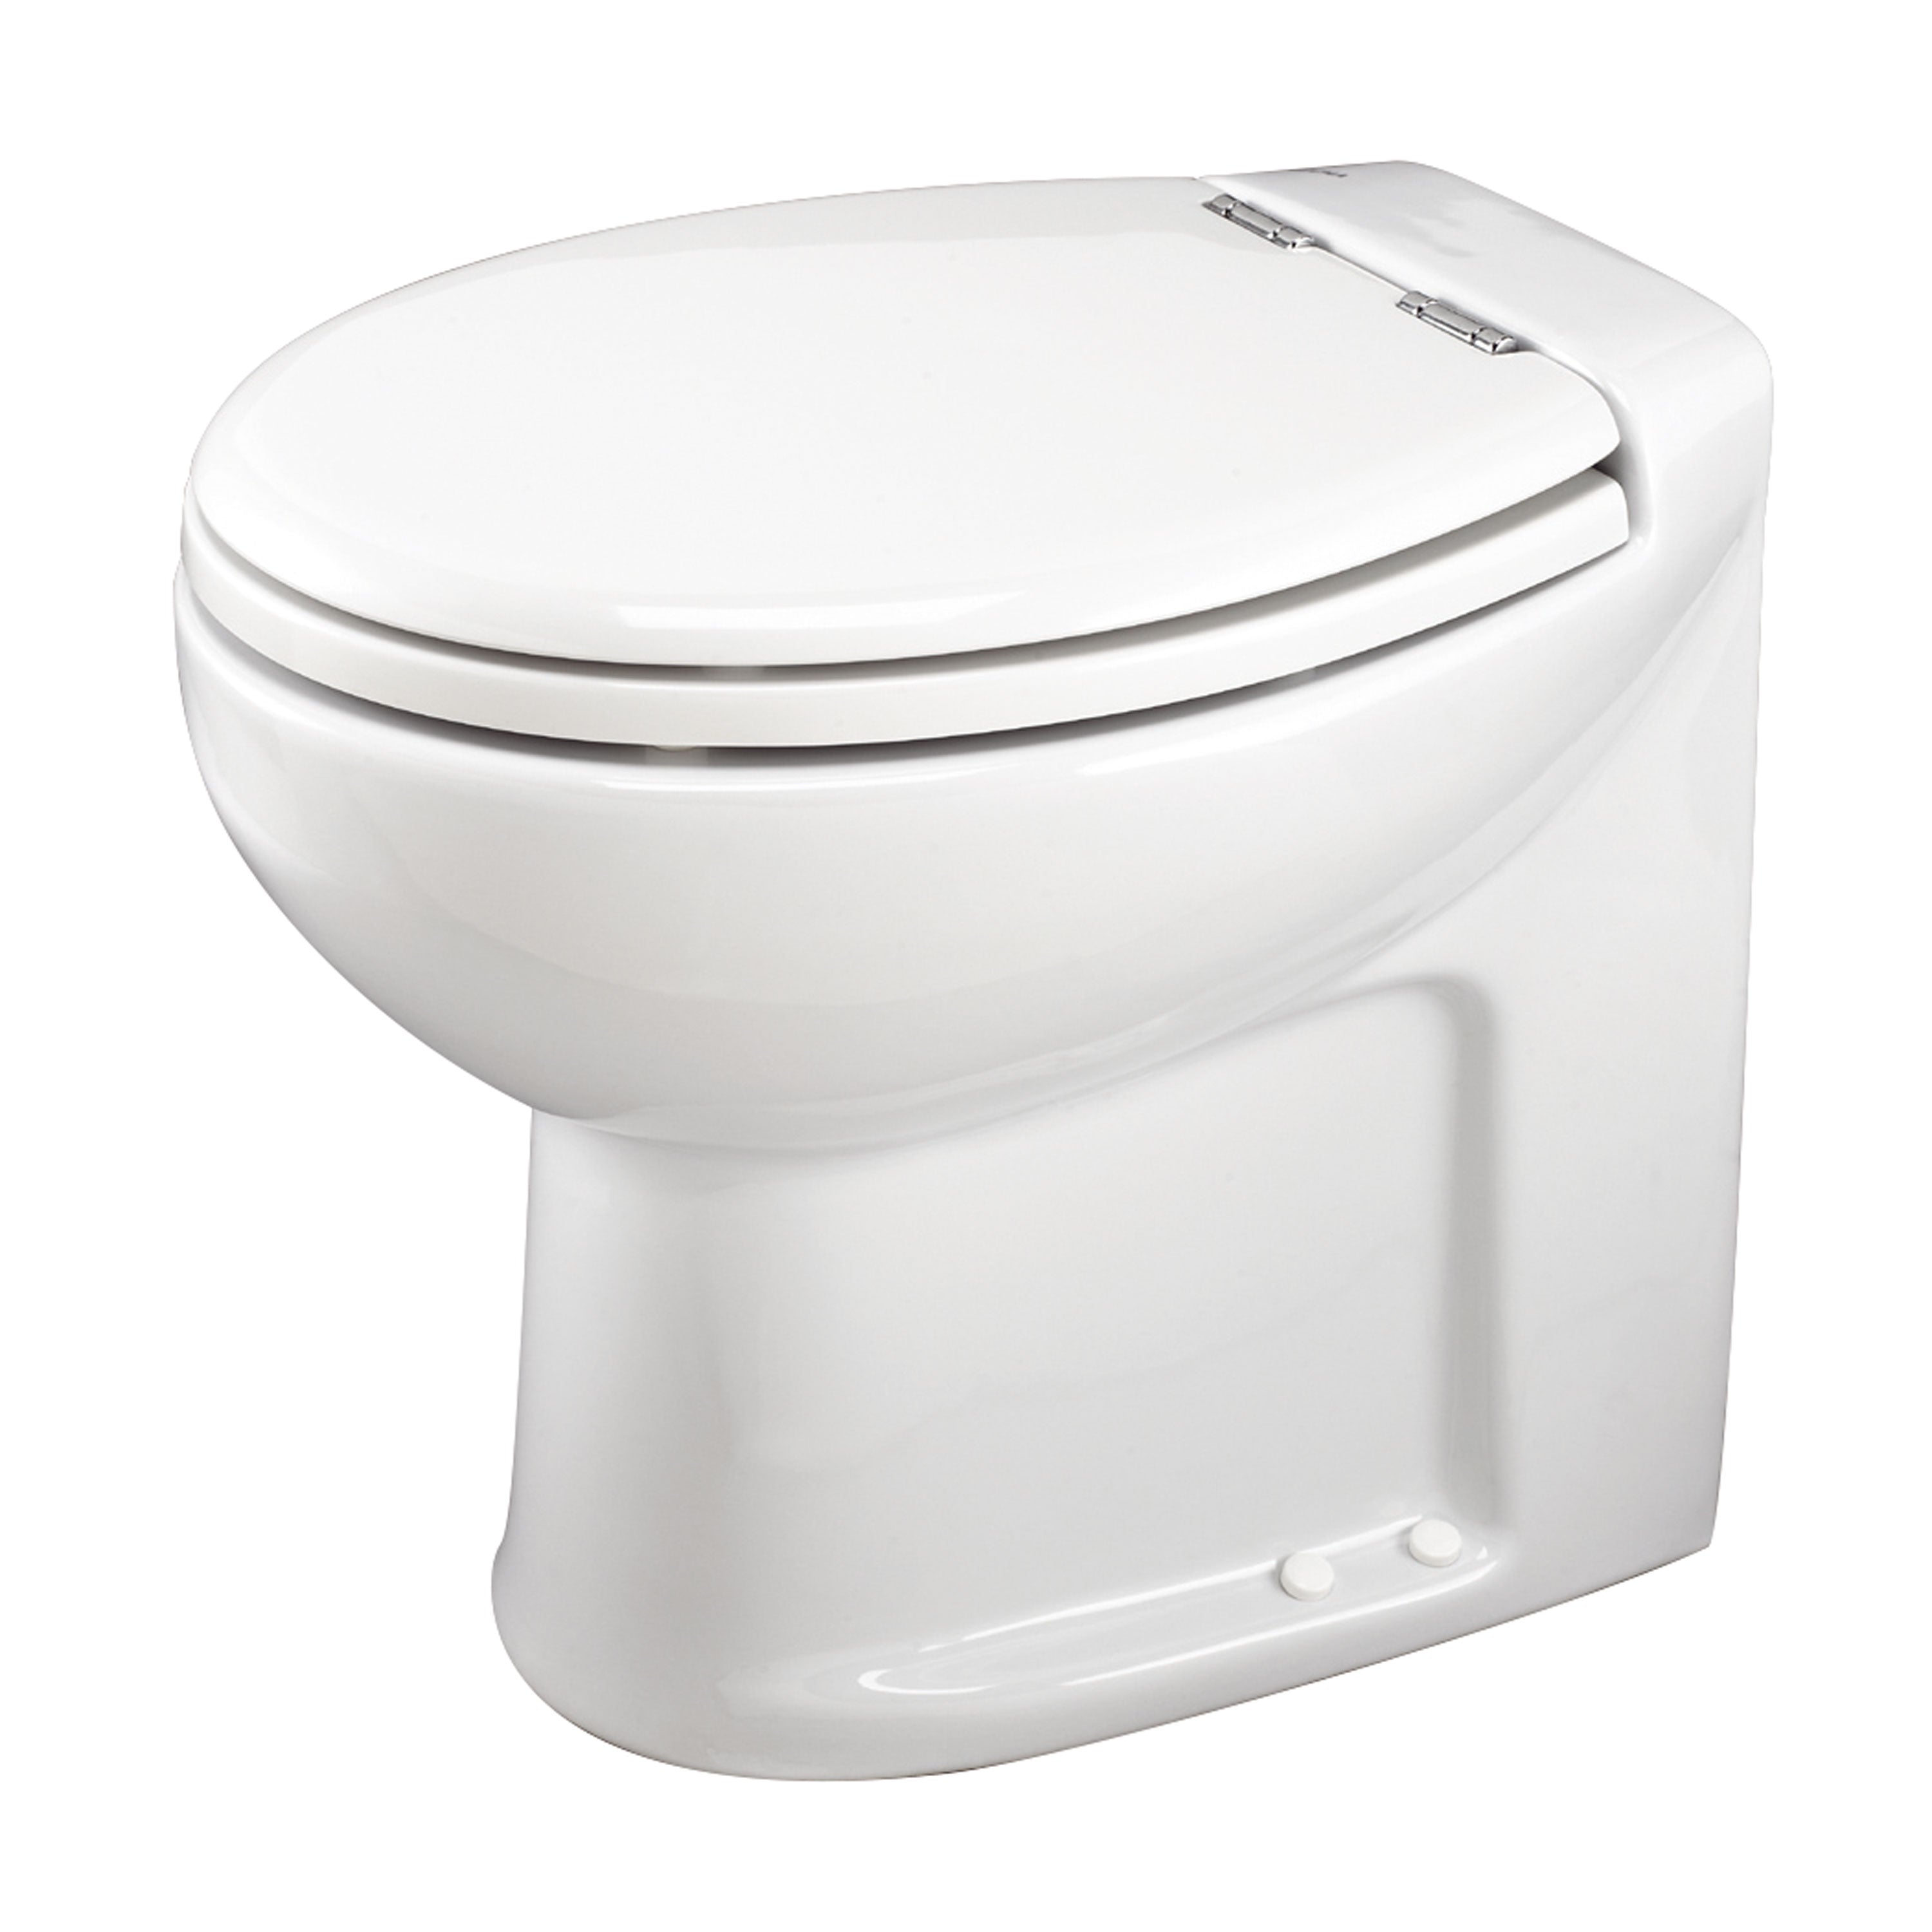 Thetford 38046 Tecma Silence Plus 1 Mode, 12V Toilet with Water Pump - High Profile, White